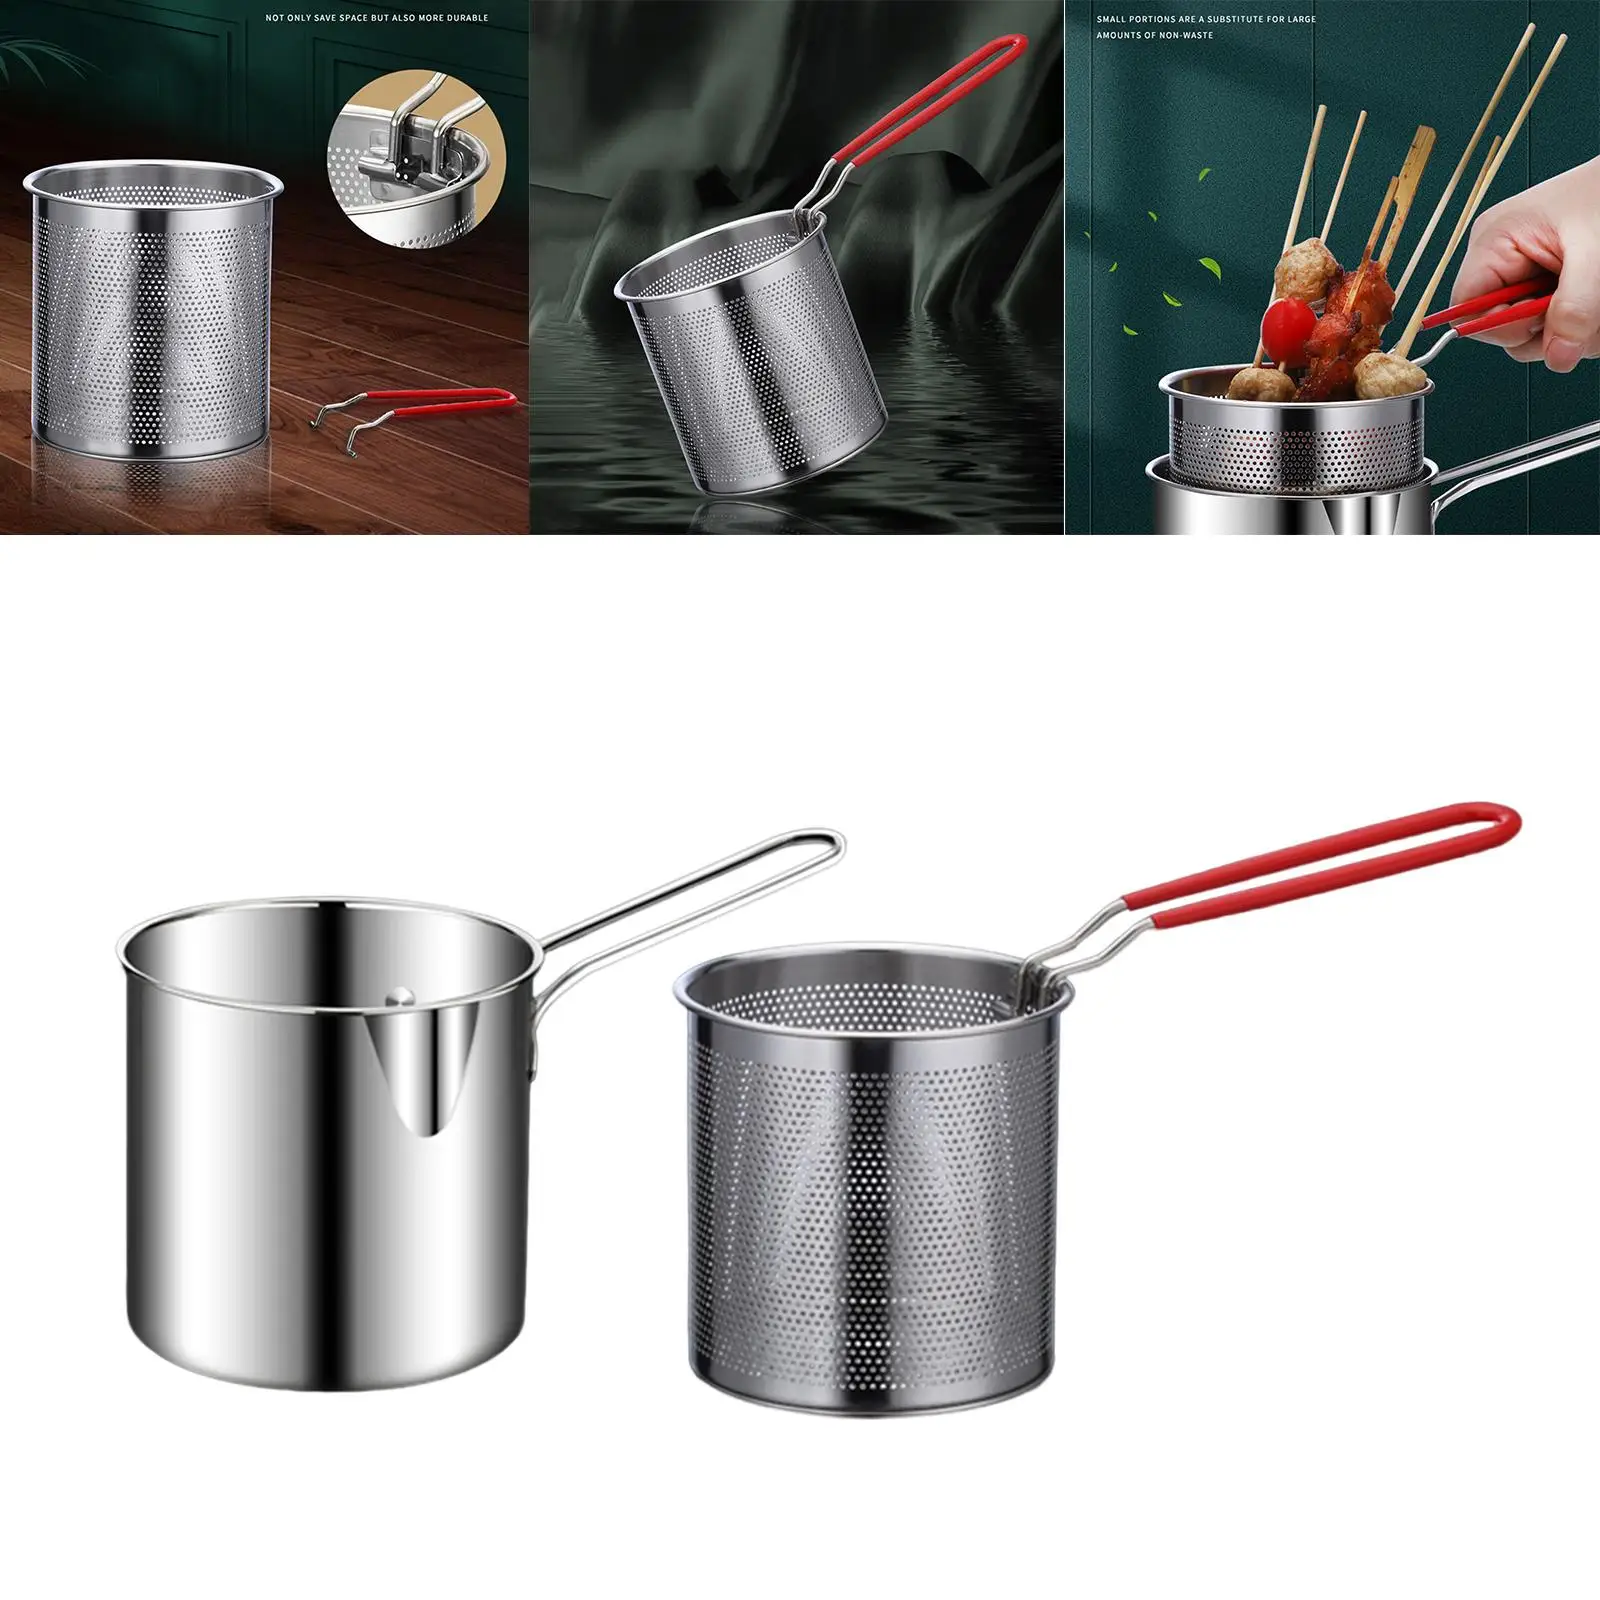 https://ae01.alicdn.com/kf/Sbb29fde950814bec911297f56e15d30ex/Stainless-Steel-Deep-Fryer-Pot-Universal-Small-with-Basket-Fryer-Pan-Fry-Pot-for-Shrimp-Fries.jpg